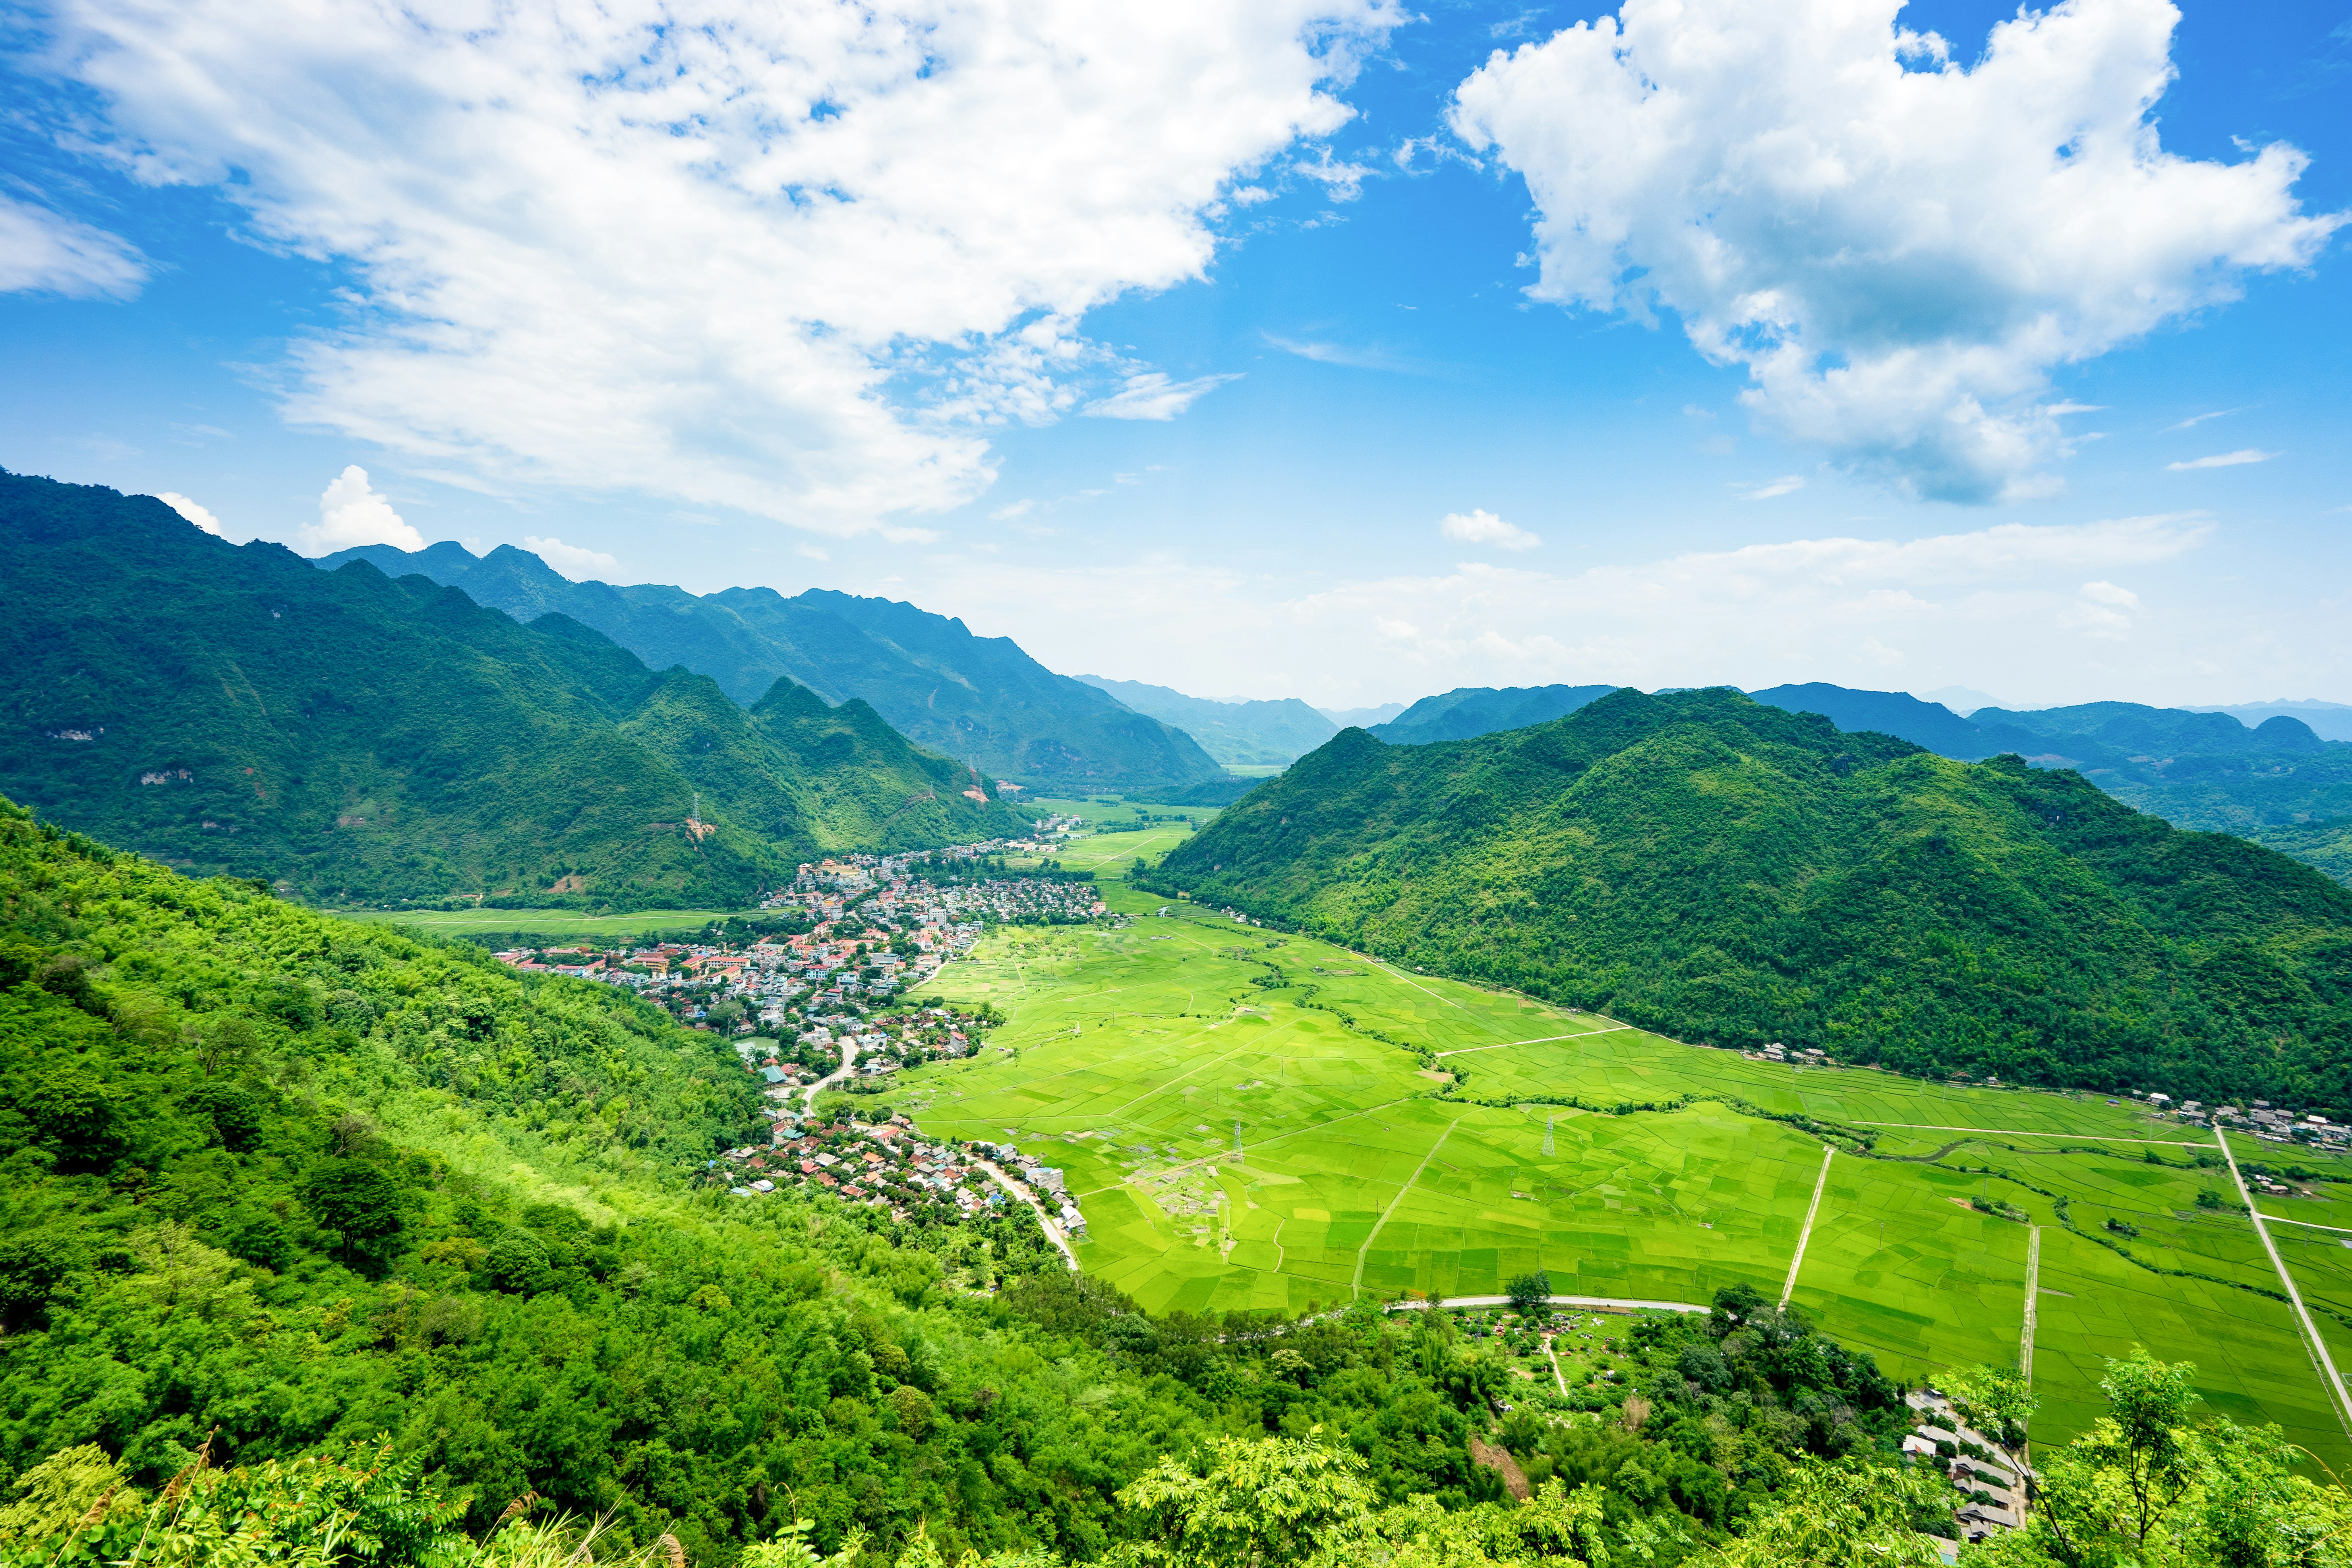 Green hills and valleys in Hoa Binh province, Vietnam